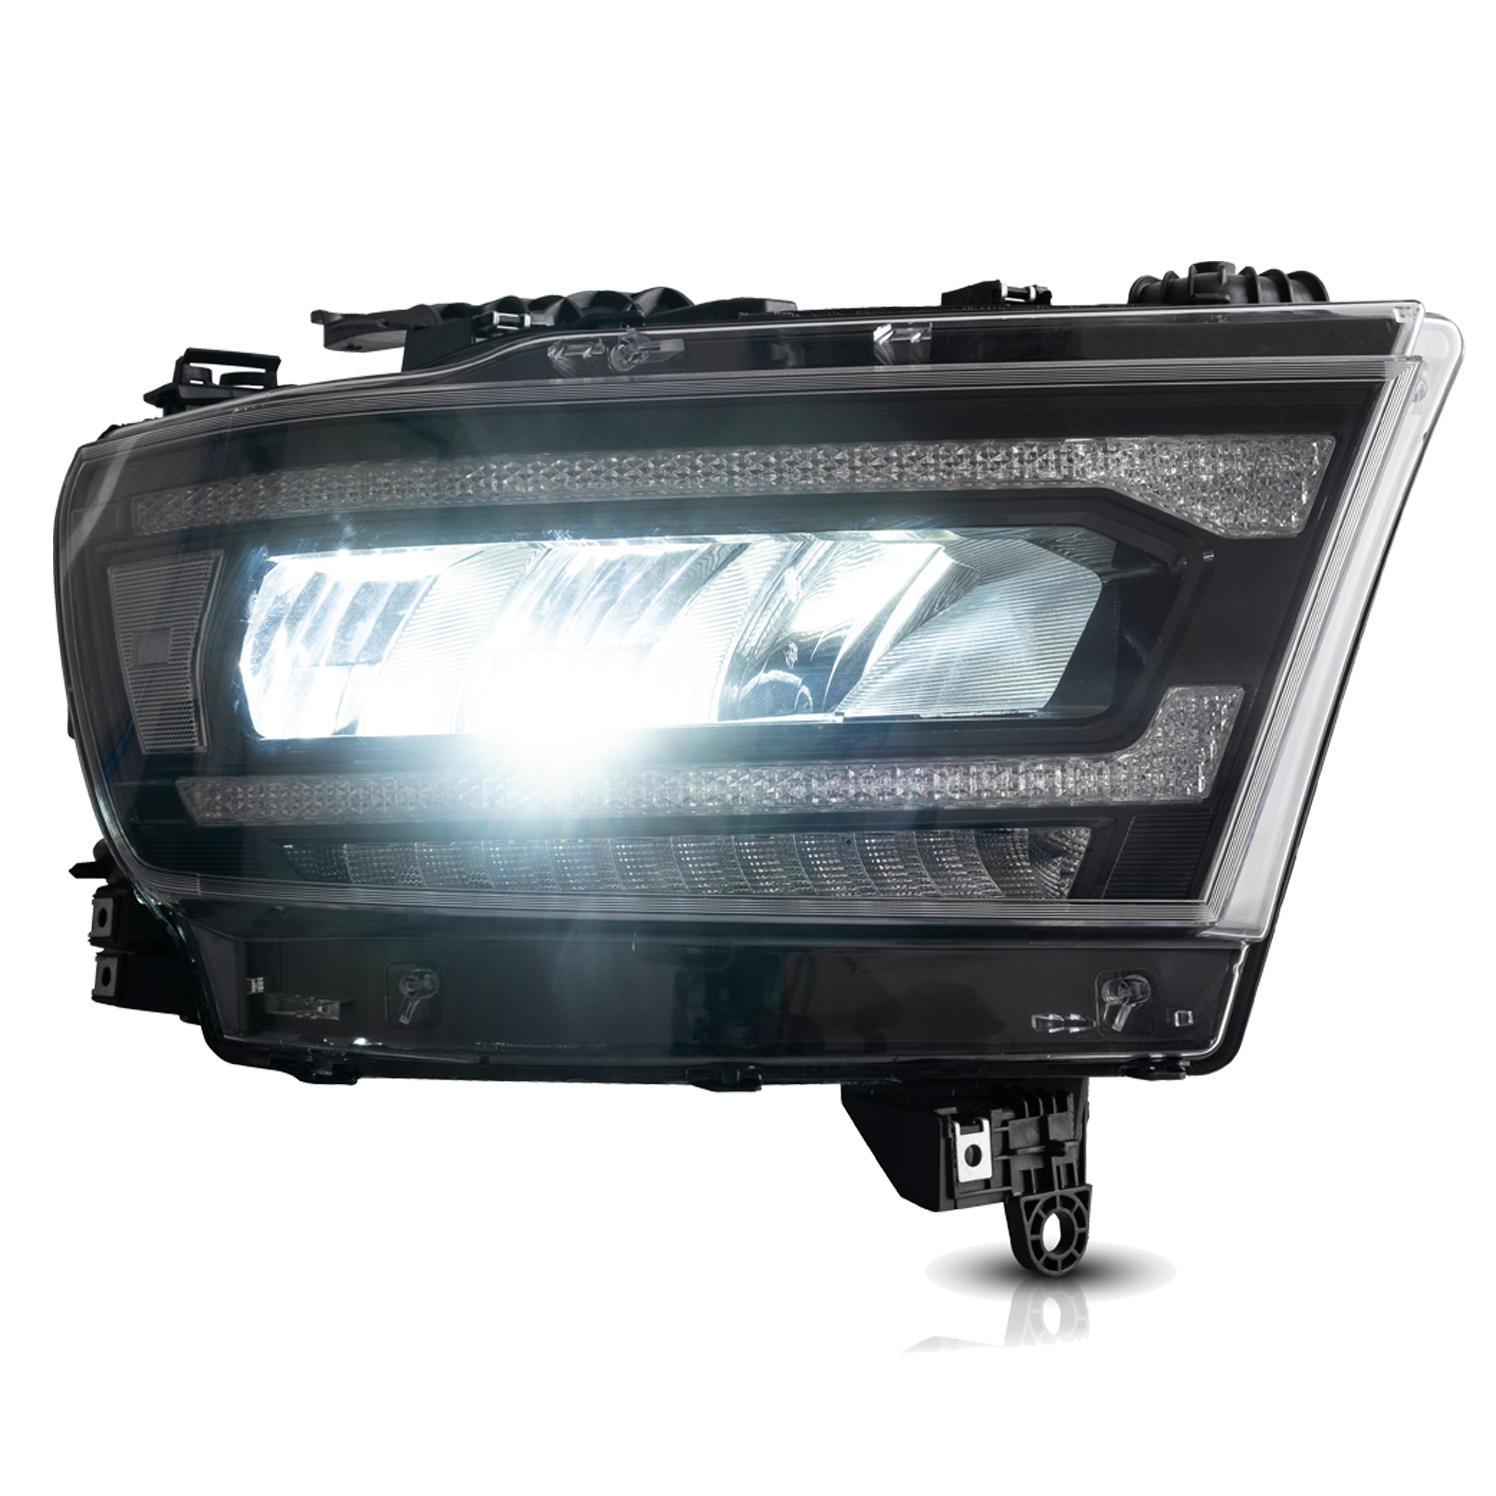 VLAND FULL LED Reflector Headlights Sequential Turn For 2019-2021 Dodge Ram 1500 | eBay 2016 Ram 1500 Big Horn Led Headlights